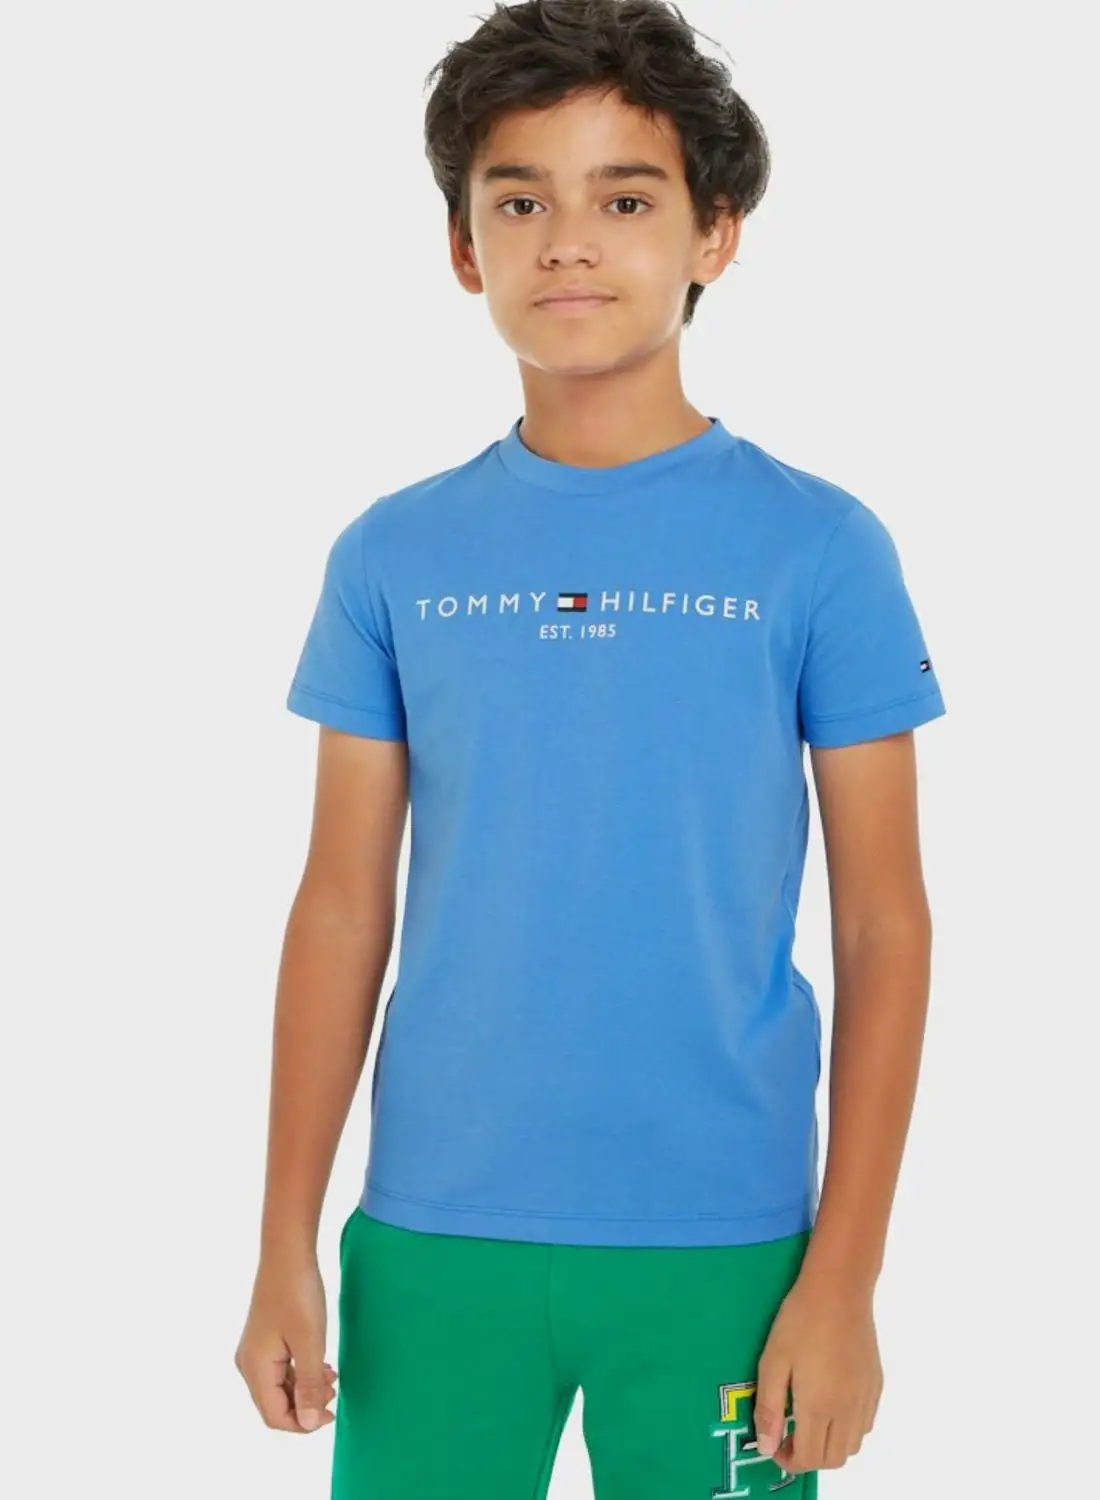 TOMMY HILFIGER Kids Logo T-Shirt